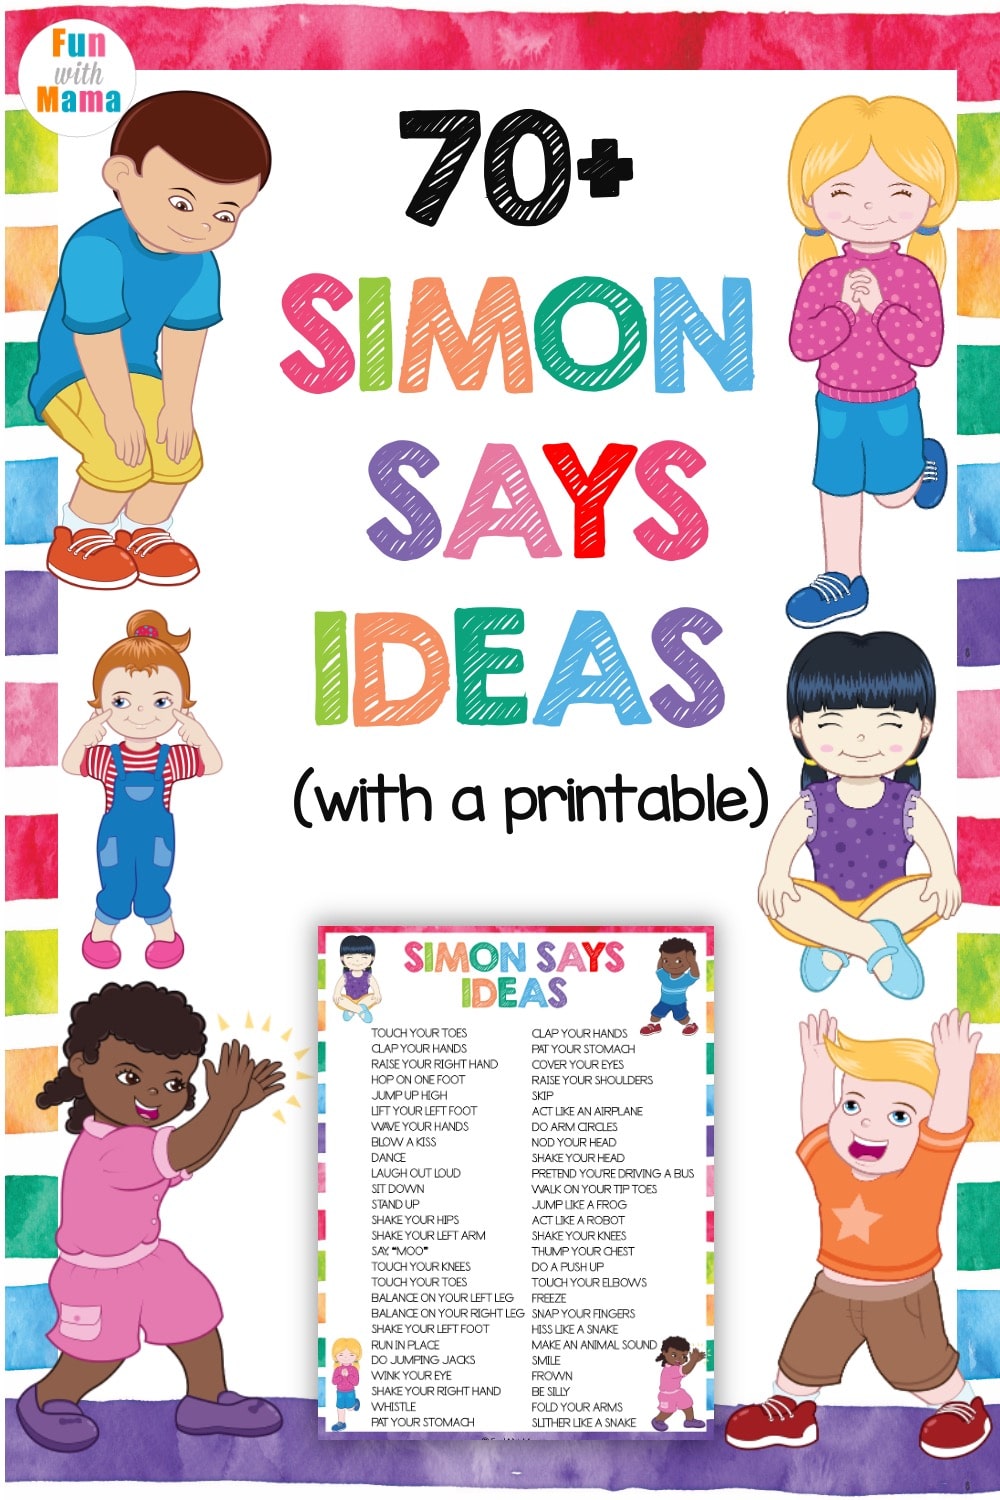 Simon Says Ideas (+Free Printable List of Game Commands)